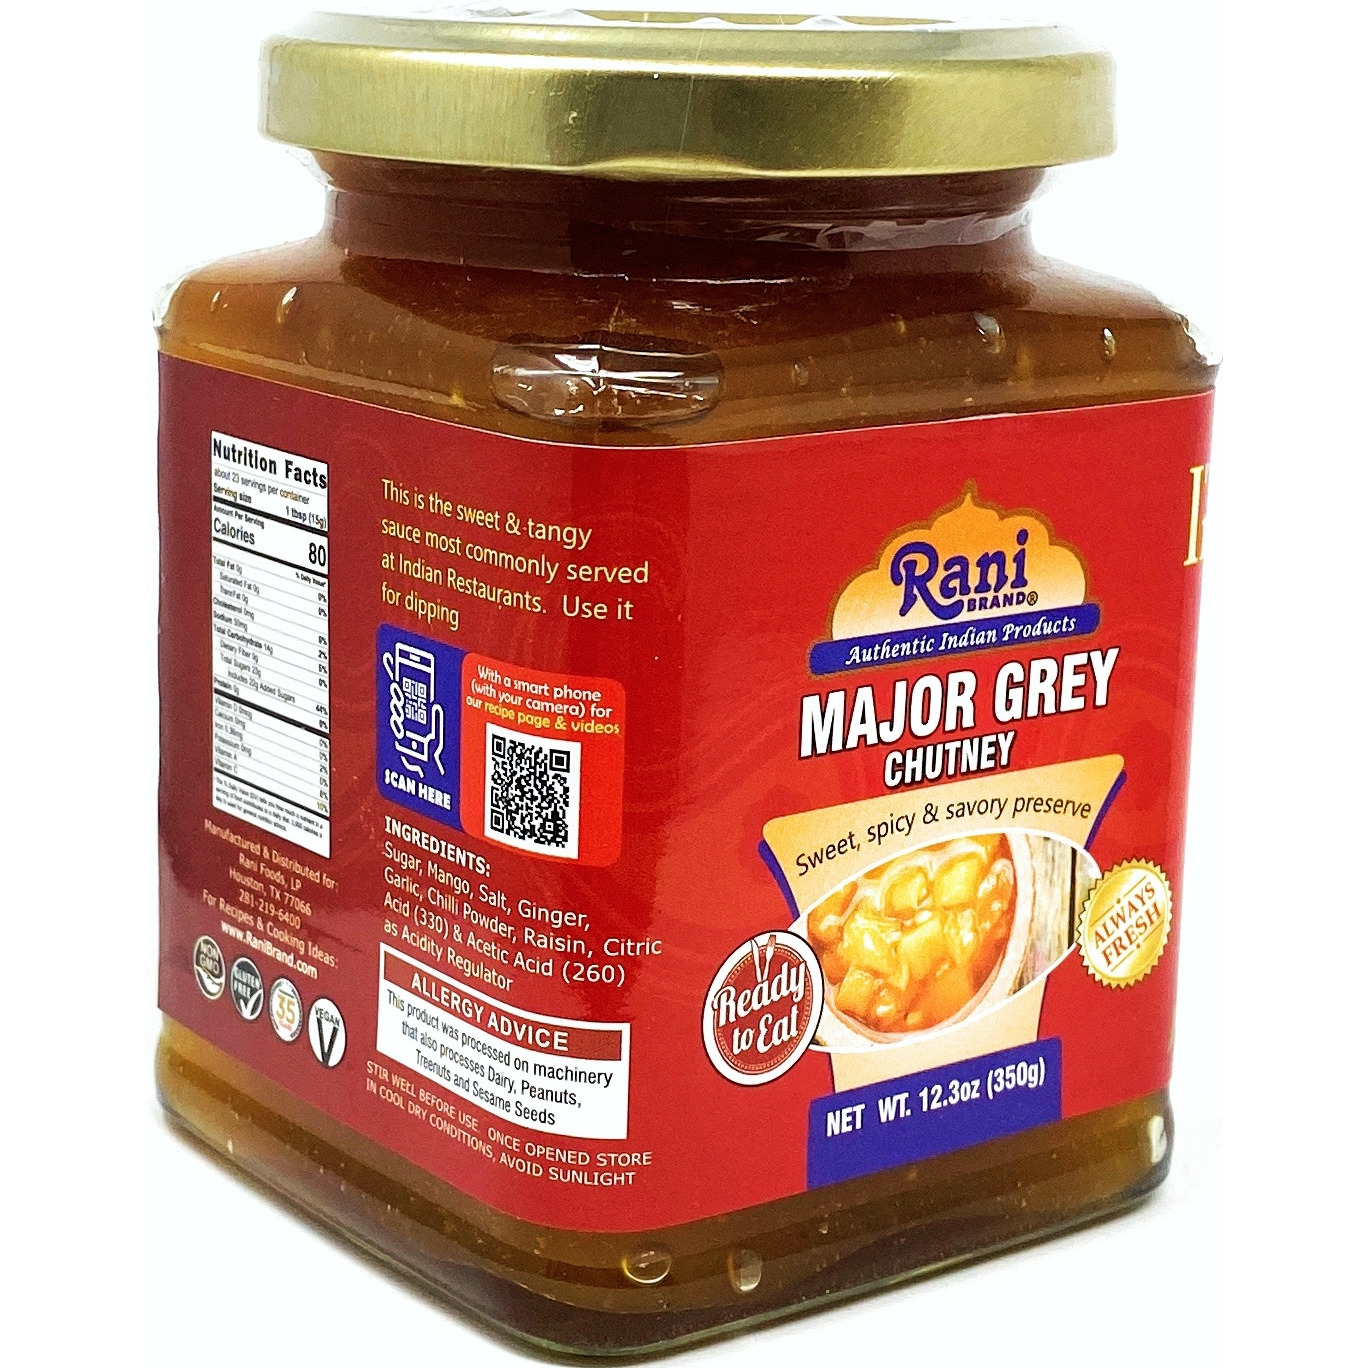 Rani Major Grey Mango Chutney (Indian Preserve) 10.5oz (300g) Glass Jar, Ready to eat, Vegan ~ Gluten Free,  All Natural, NON-GMO